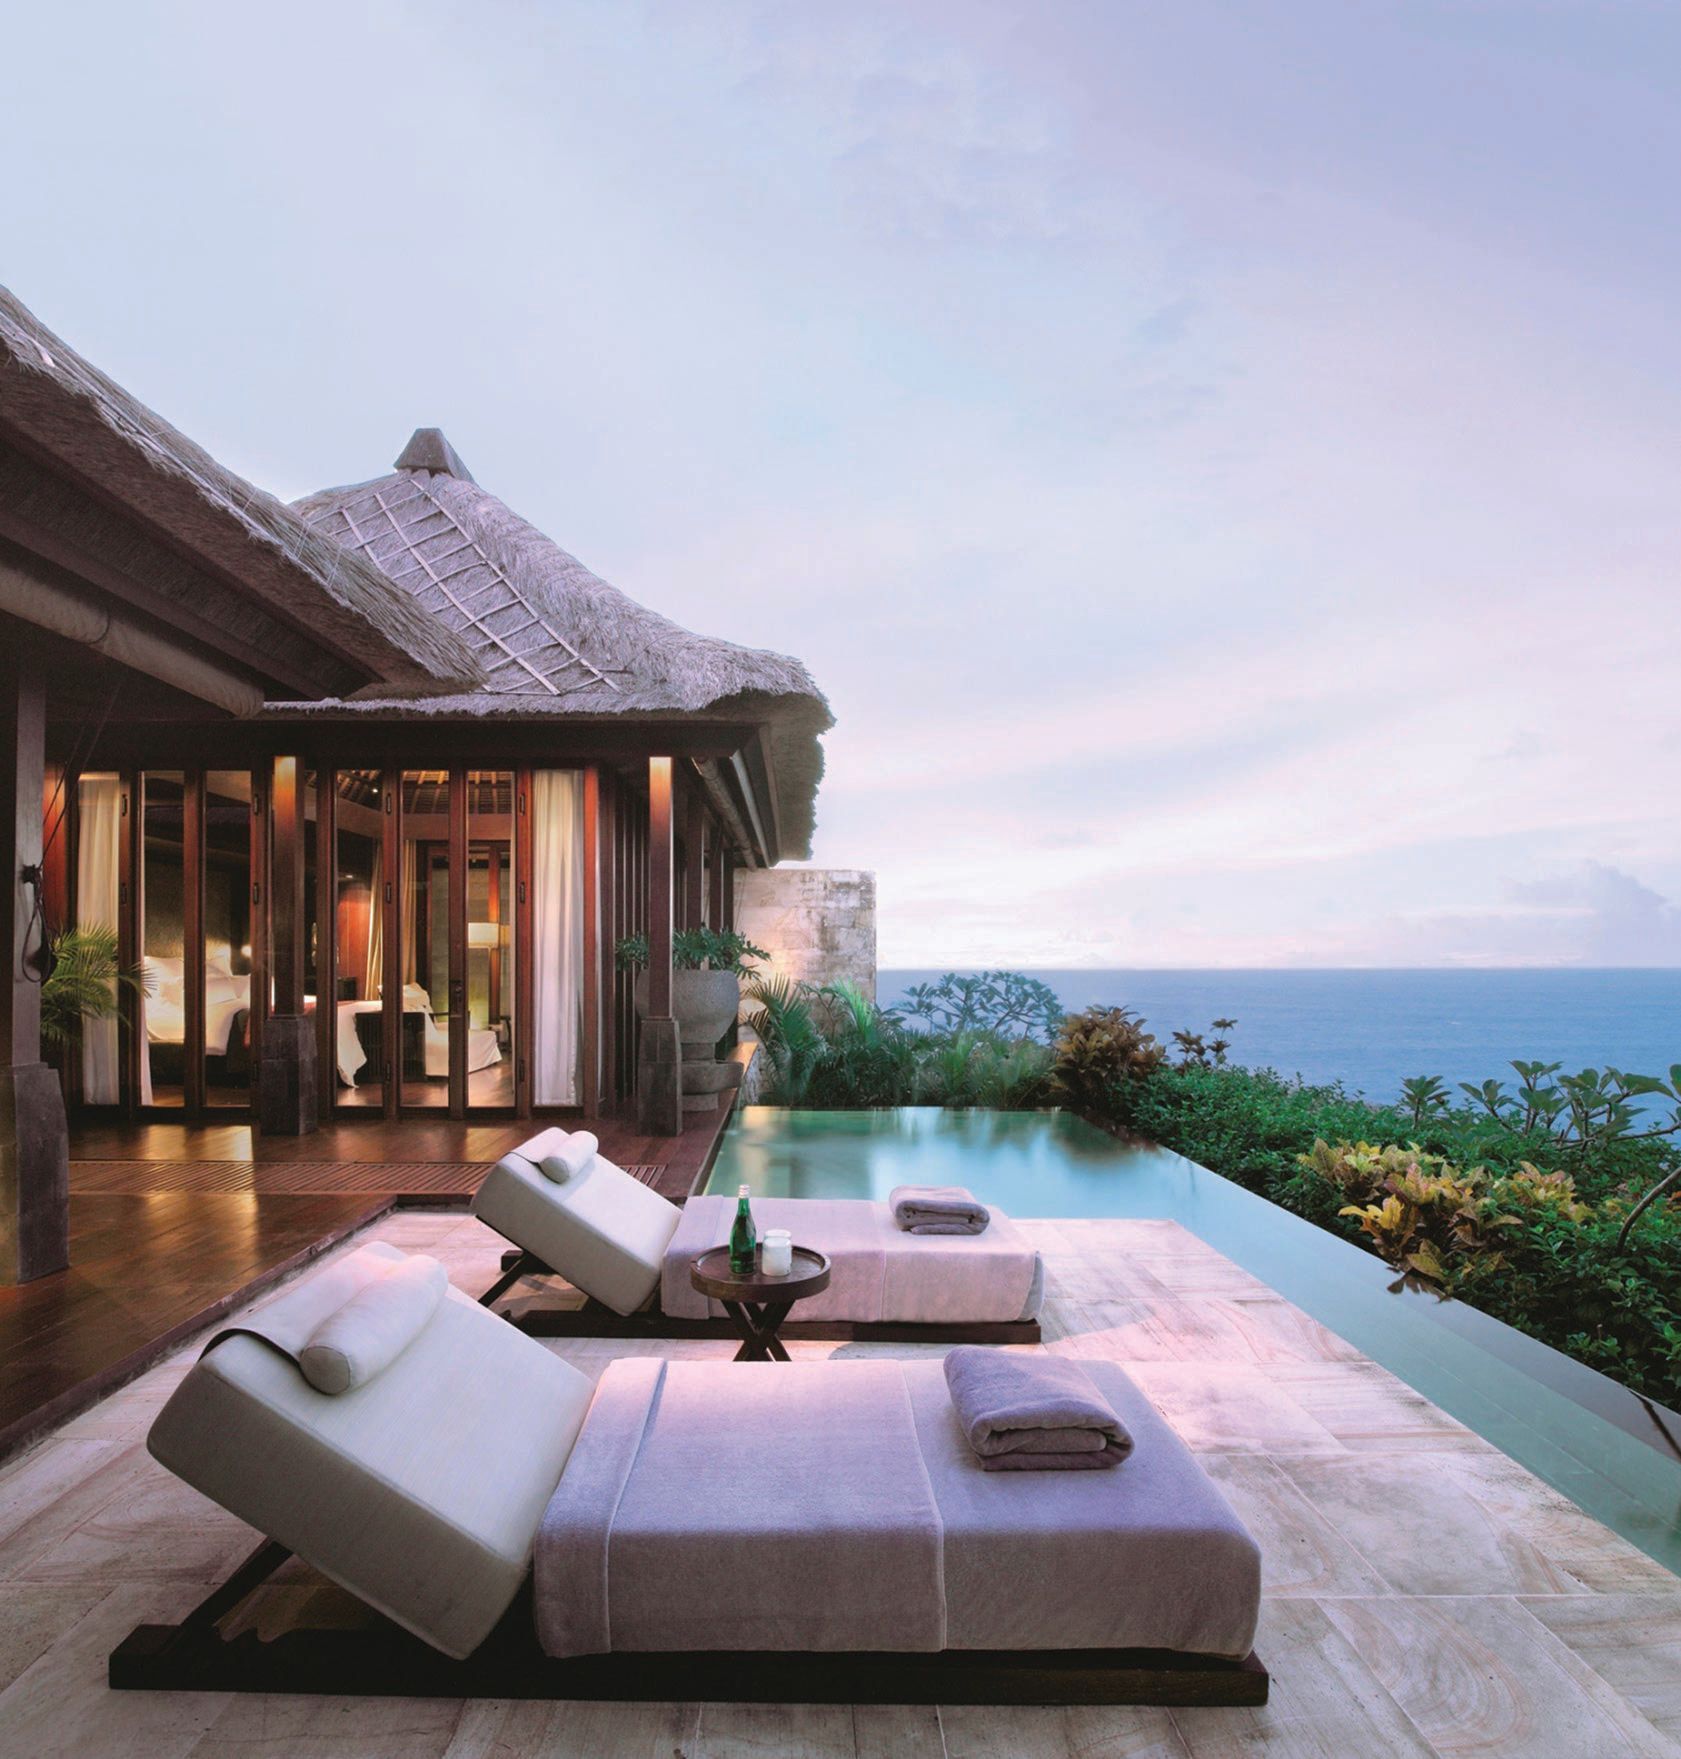 Bulgari Resort Bali’s Ocean Cliff Villas offer unobstructed ocean views and serene plunge pools. PHOTO COURTESY OF BULGARI HOTELS & RESORTS